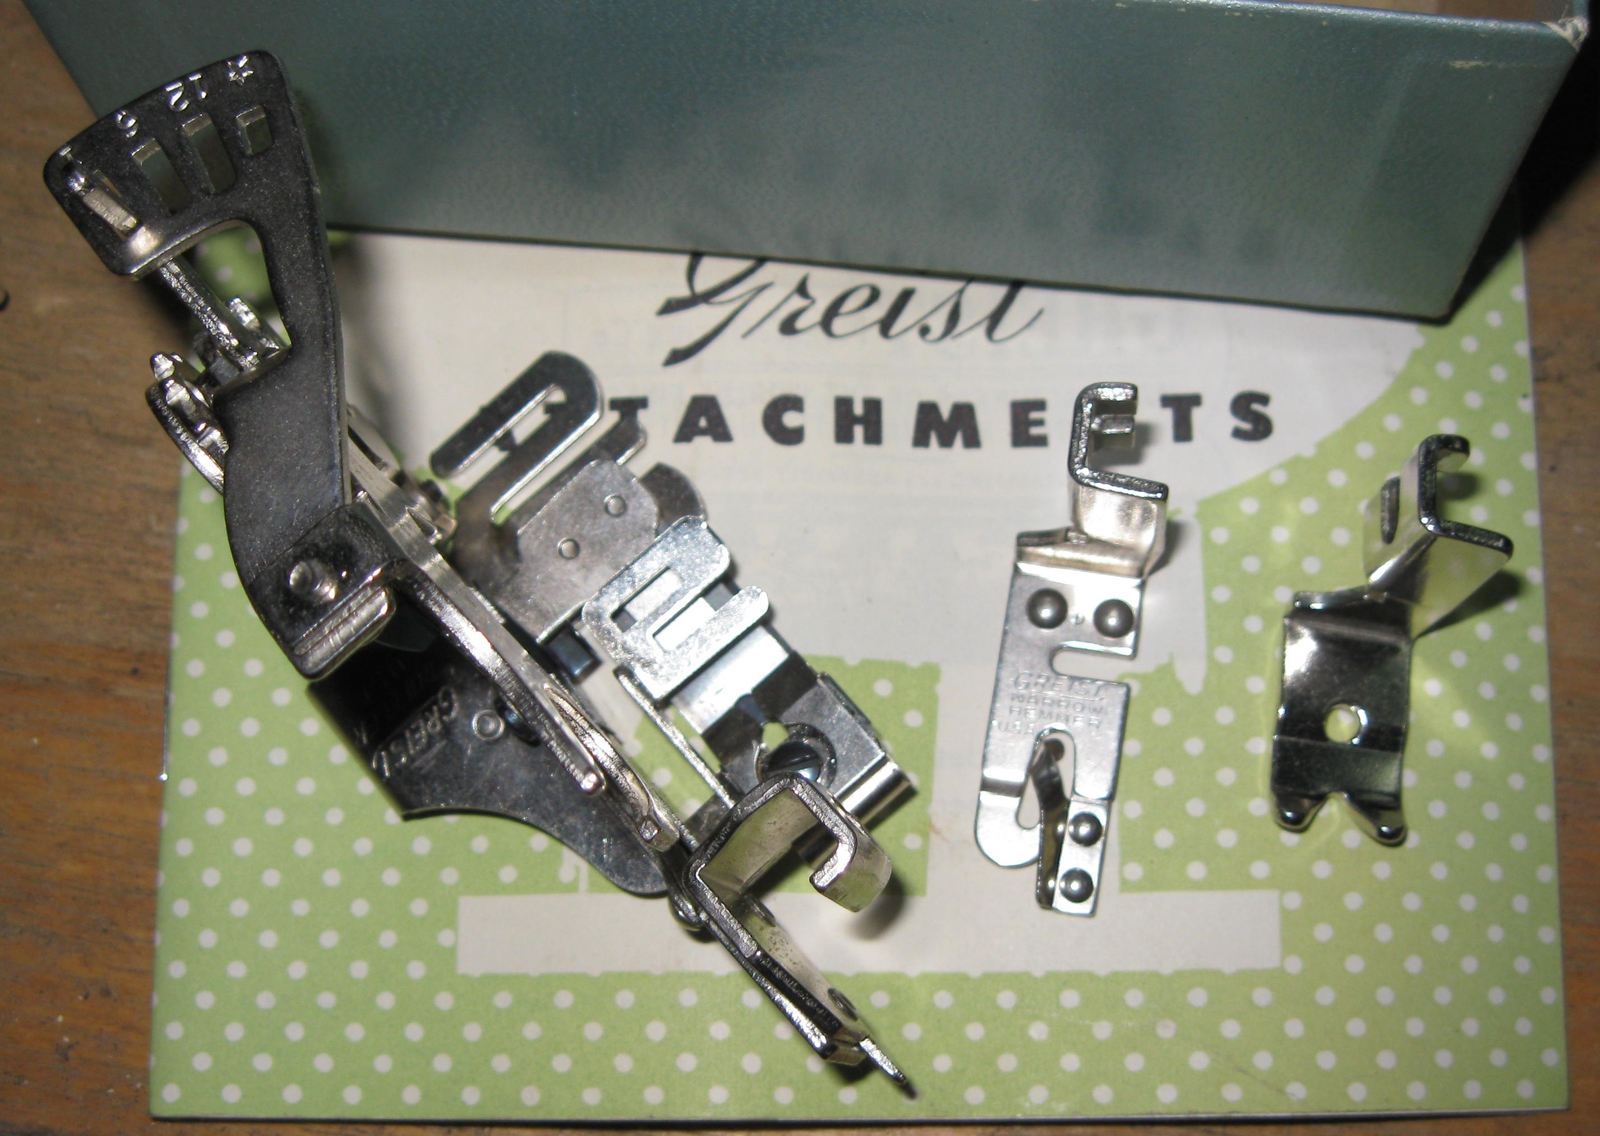 Greist Sewing Machine Attachments Special Set IOB Low Shank Near New - $12.50